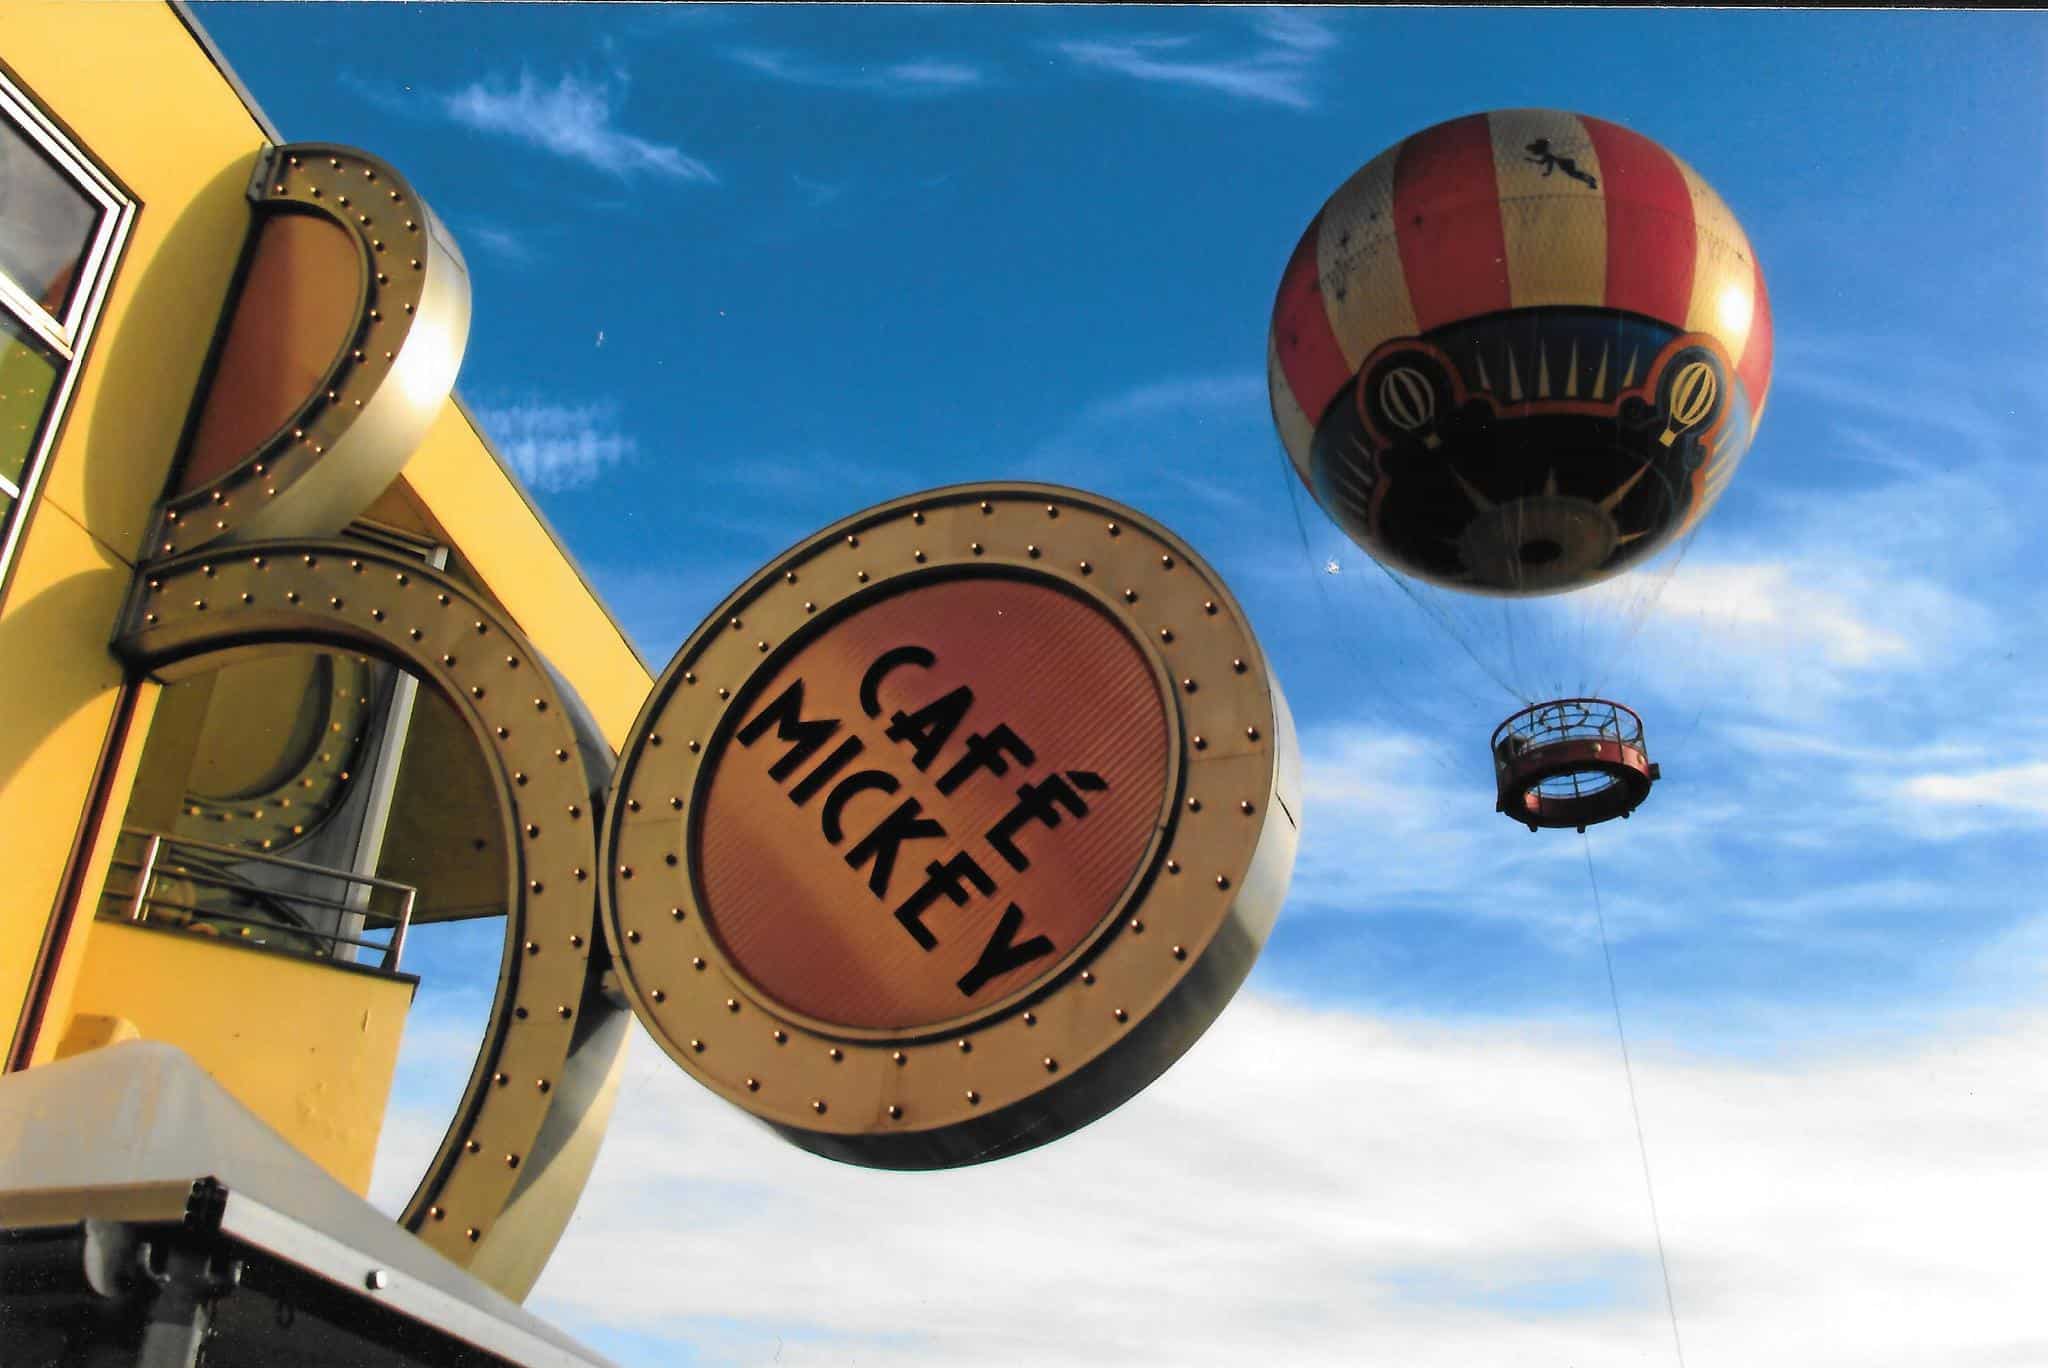 cafe mickey at disneyland paris with balloon